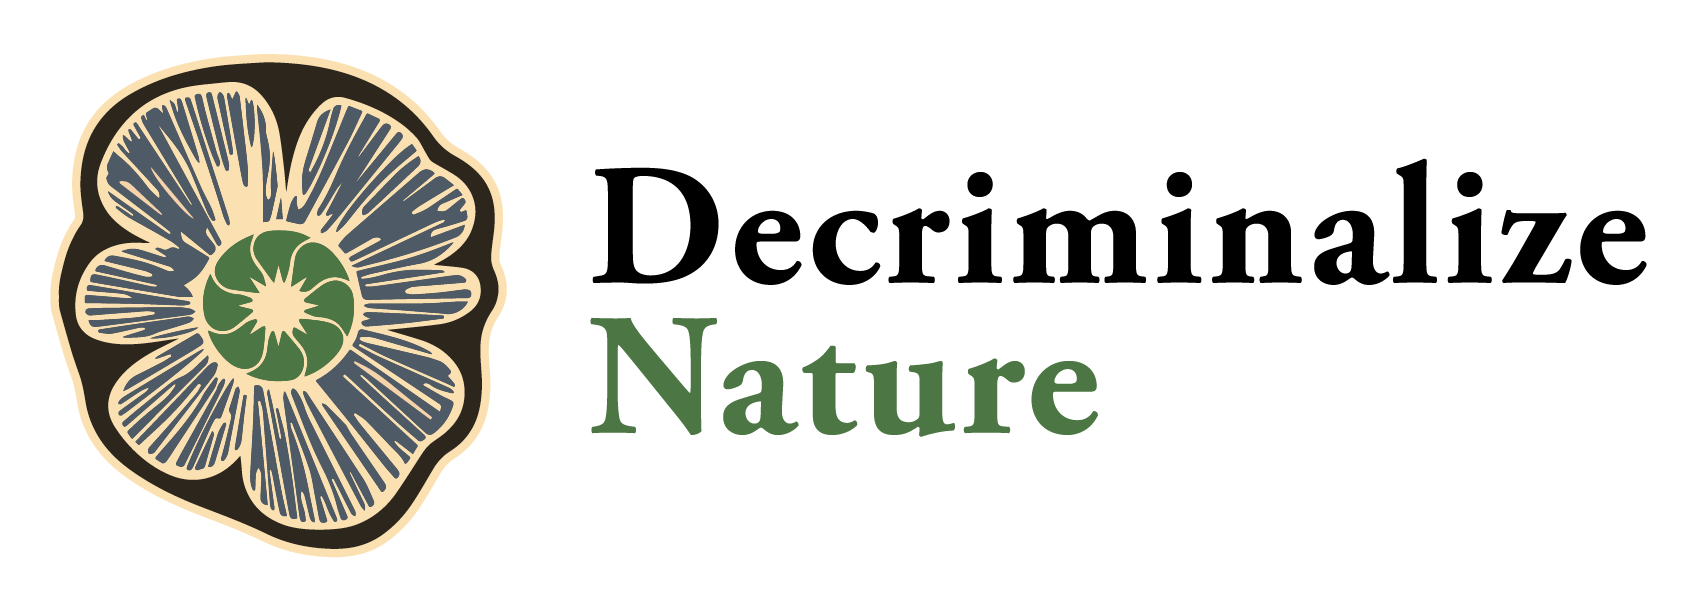 Decriminalize Nature logo